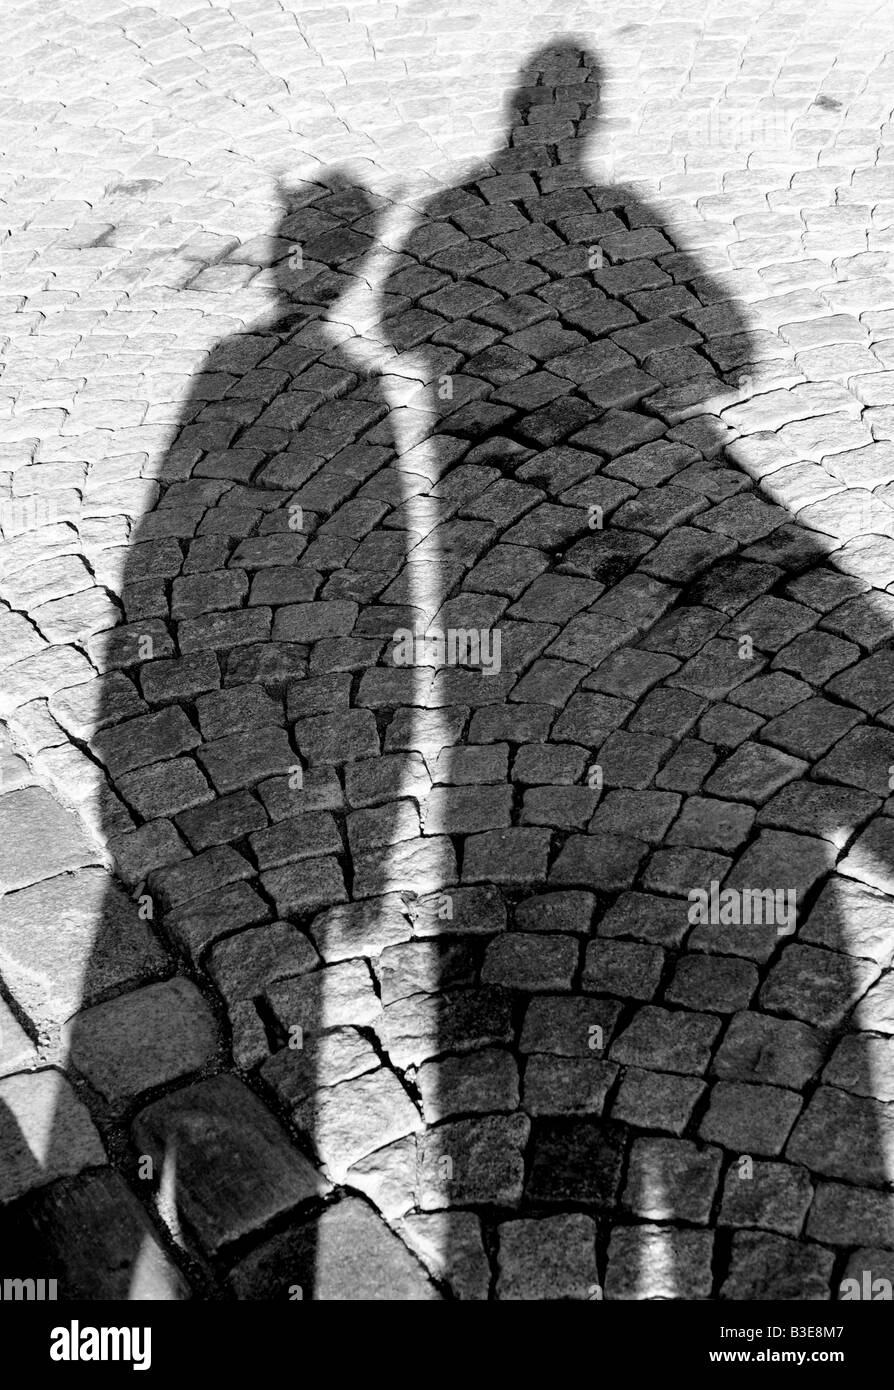 Shadow people Stock Photo